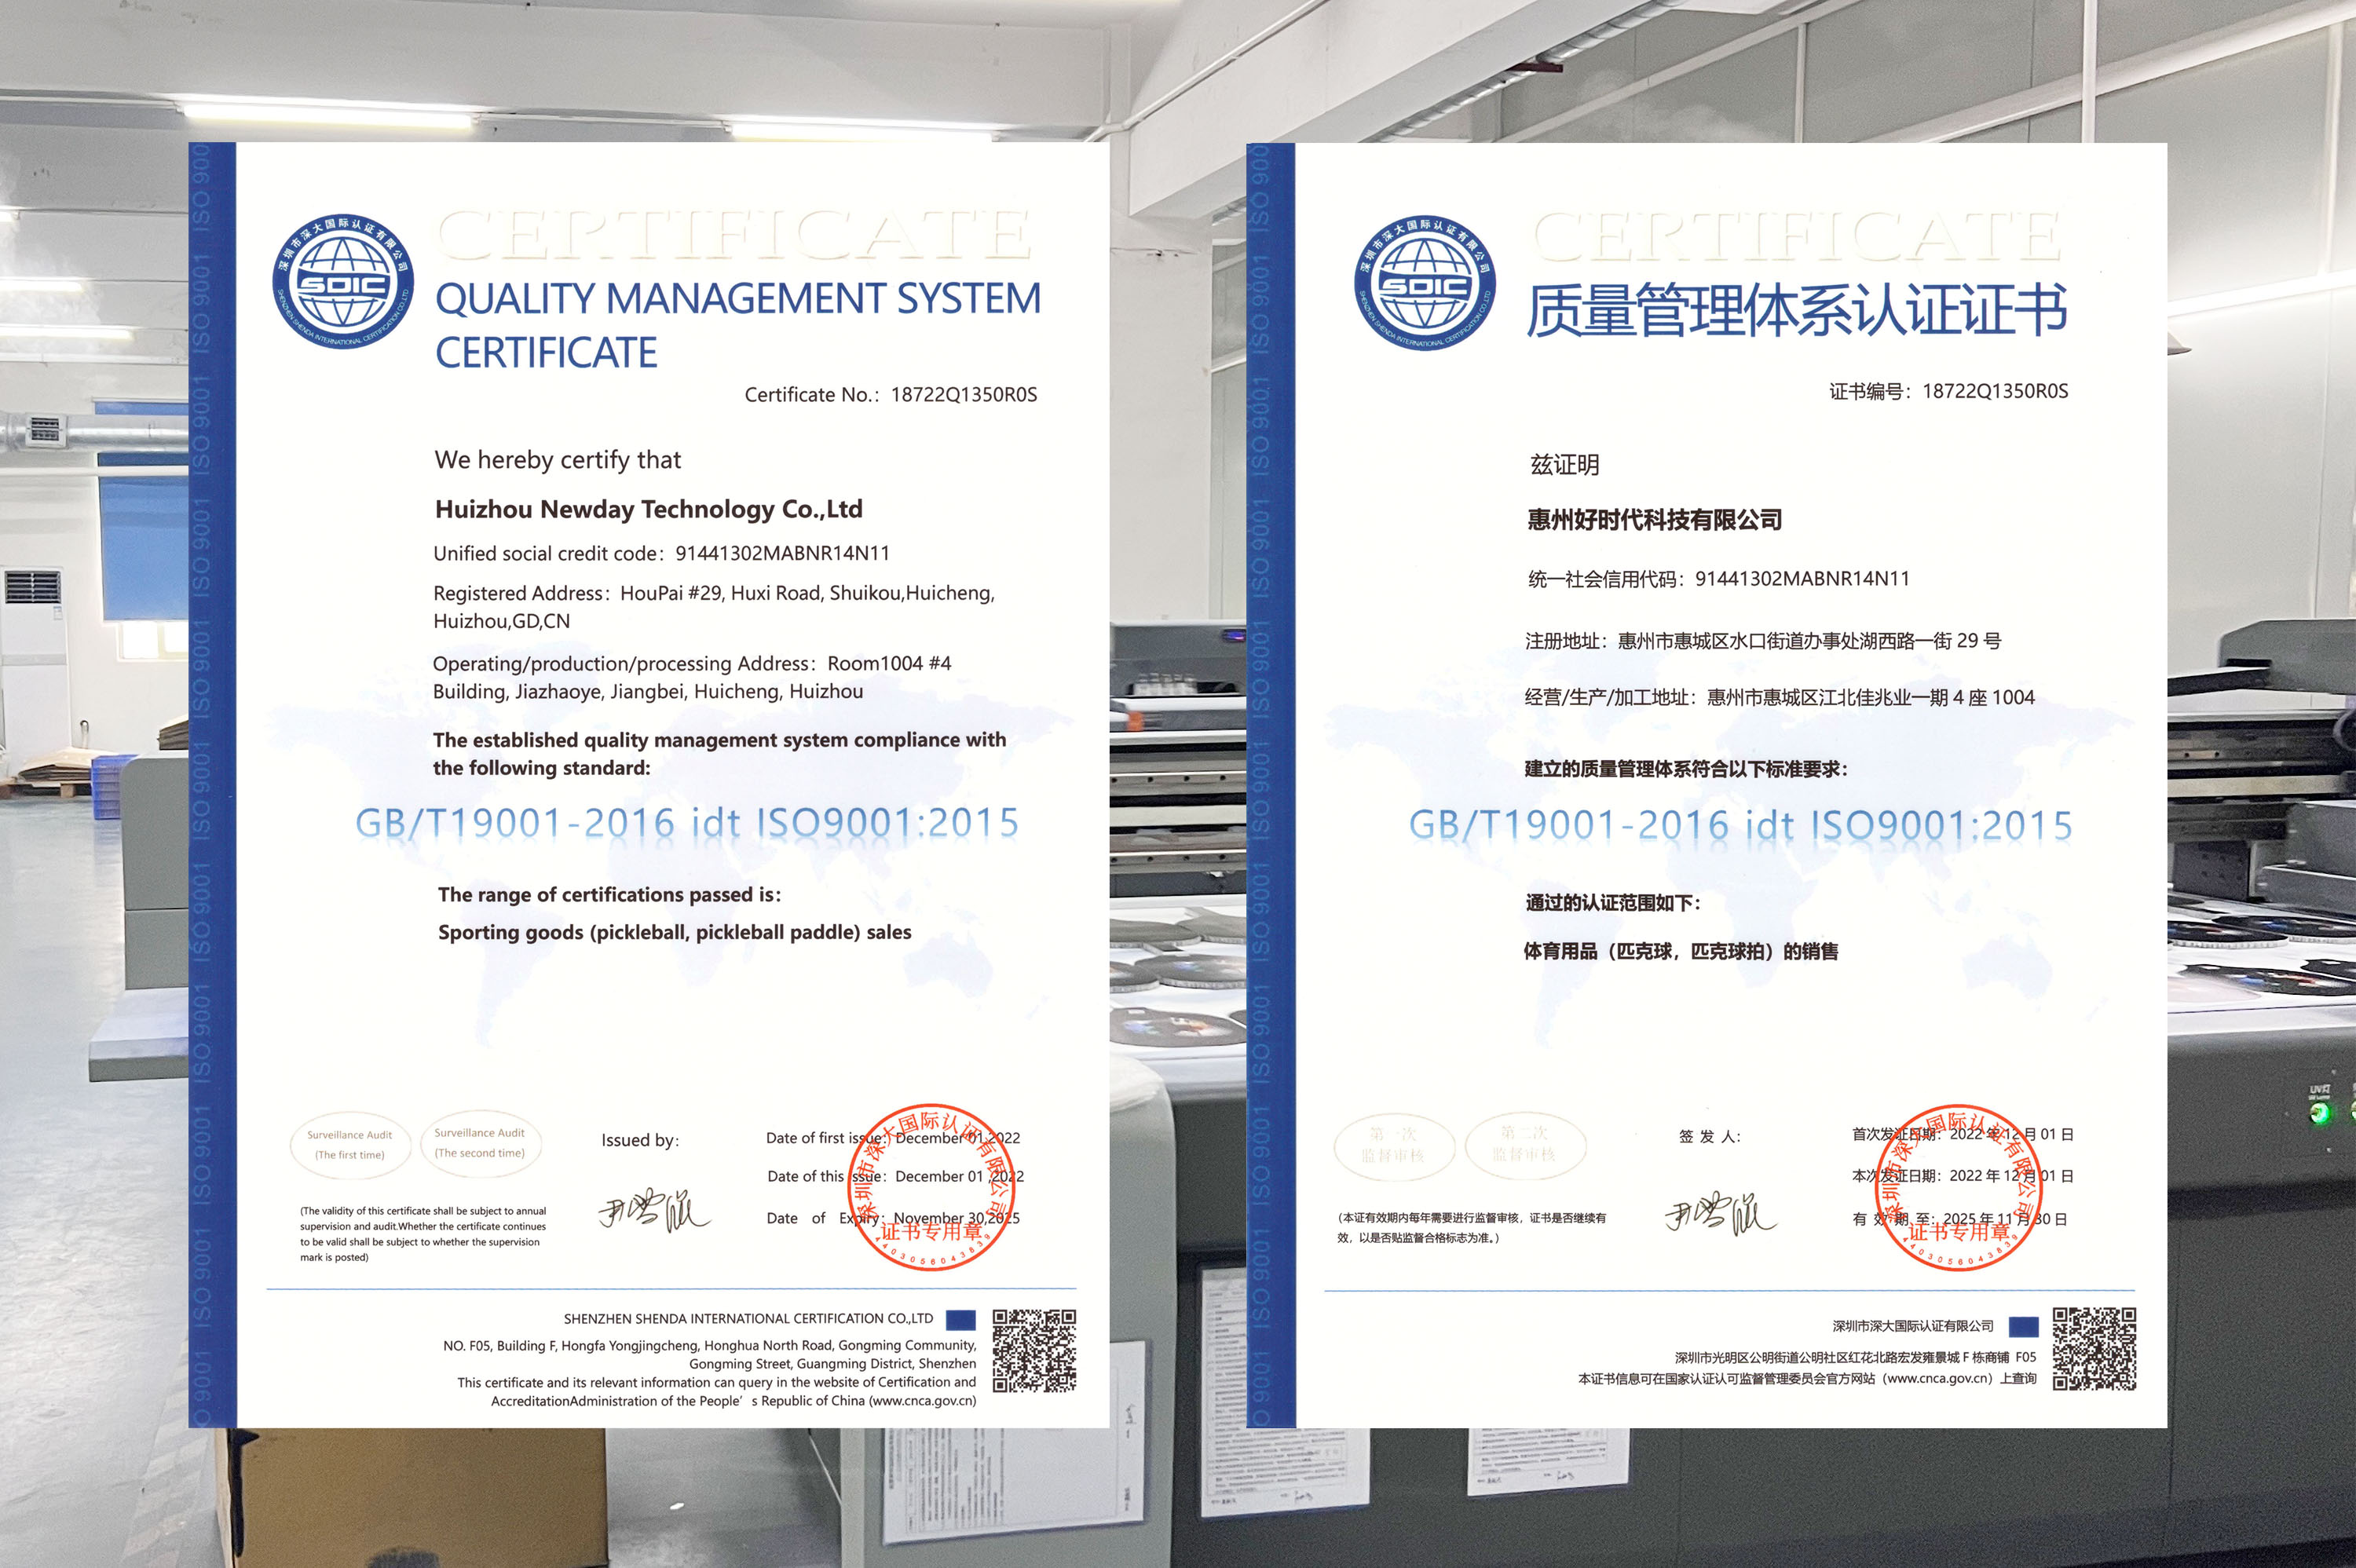 ISO9001 sertifikatas, mes jį gavome!